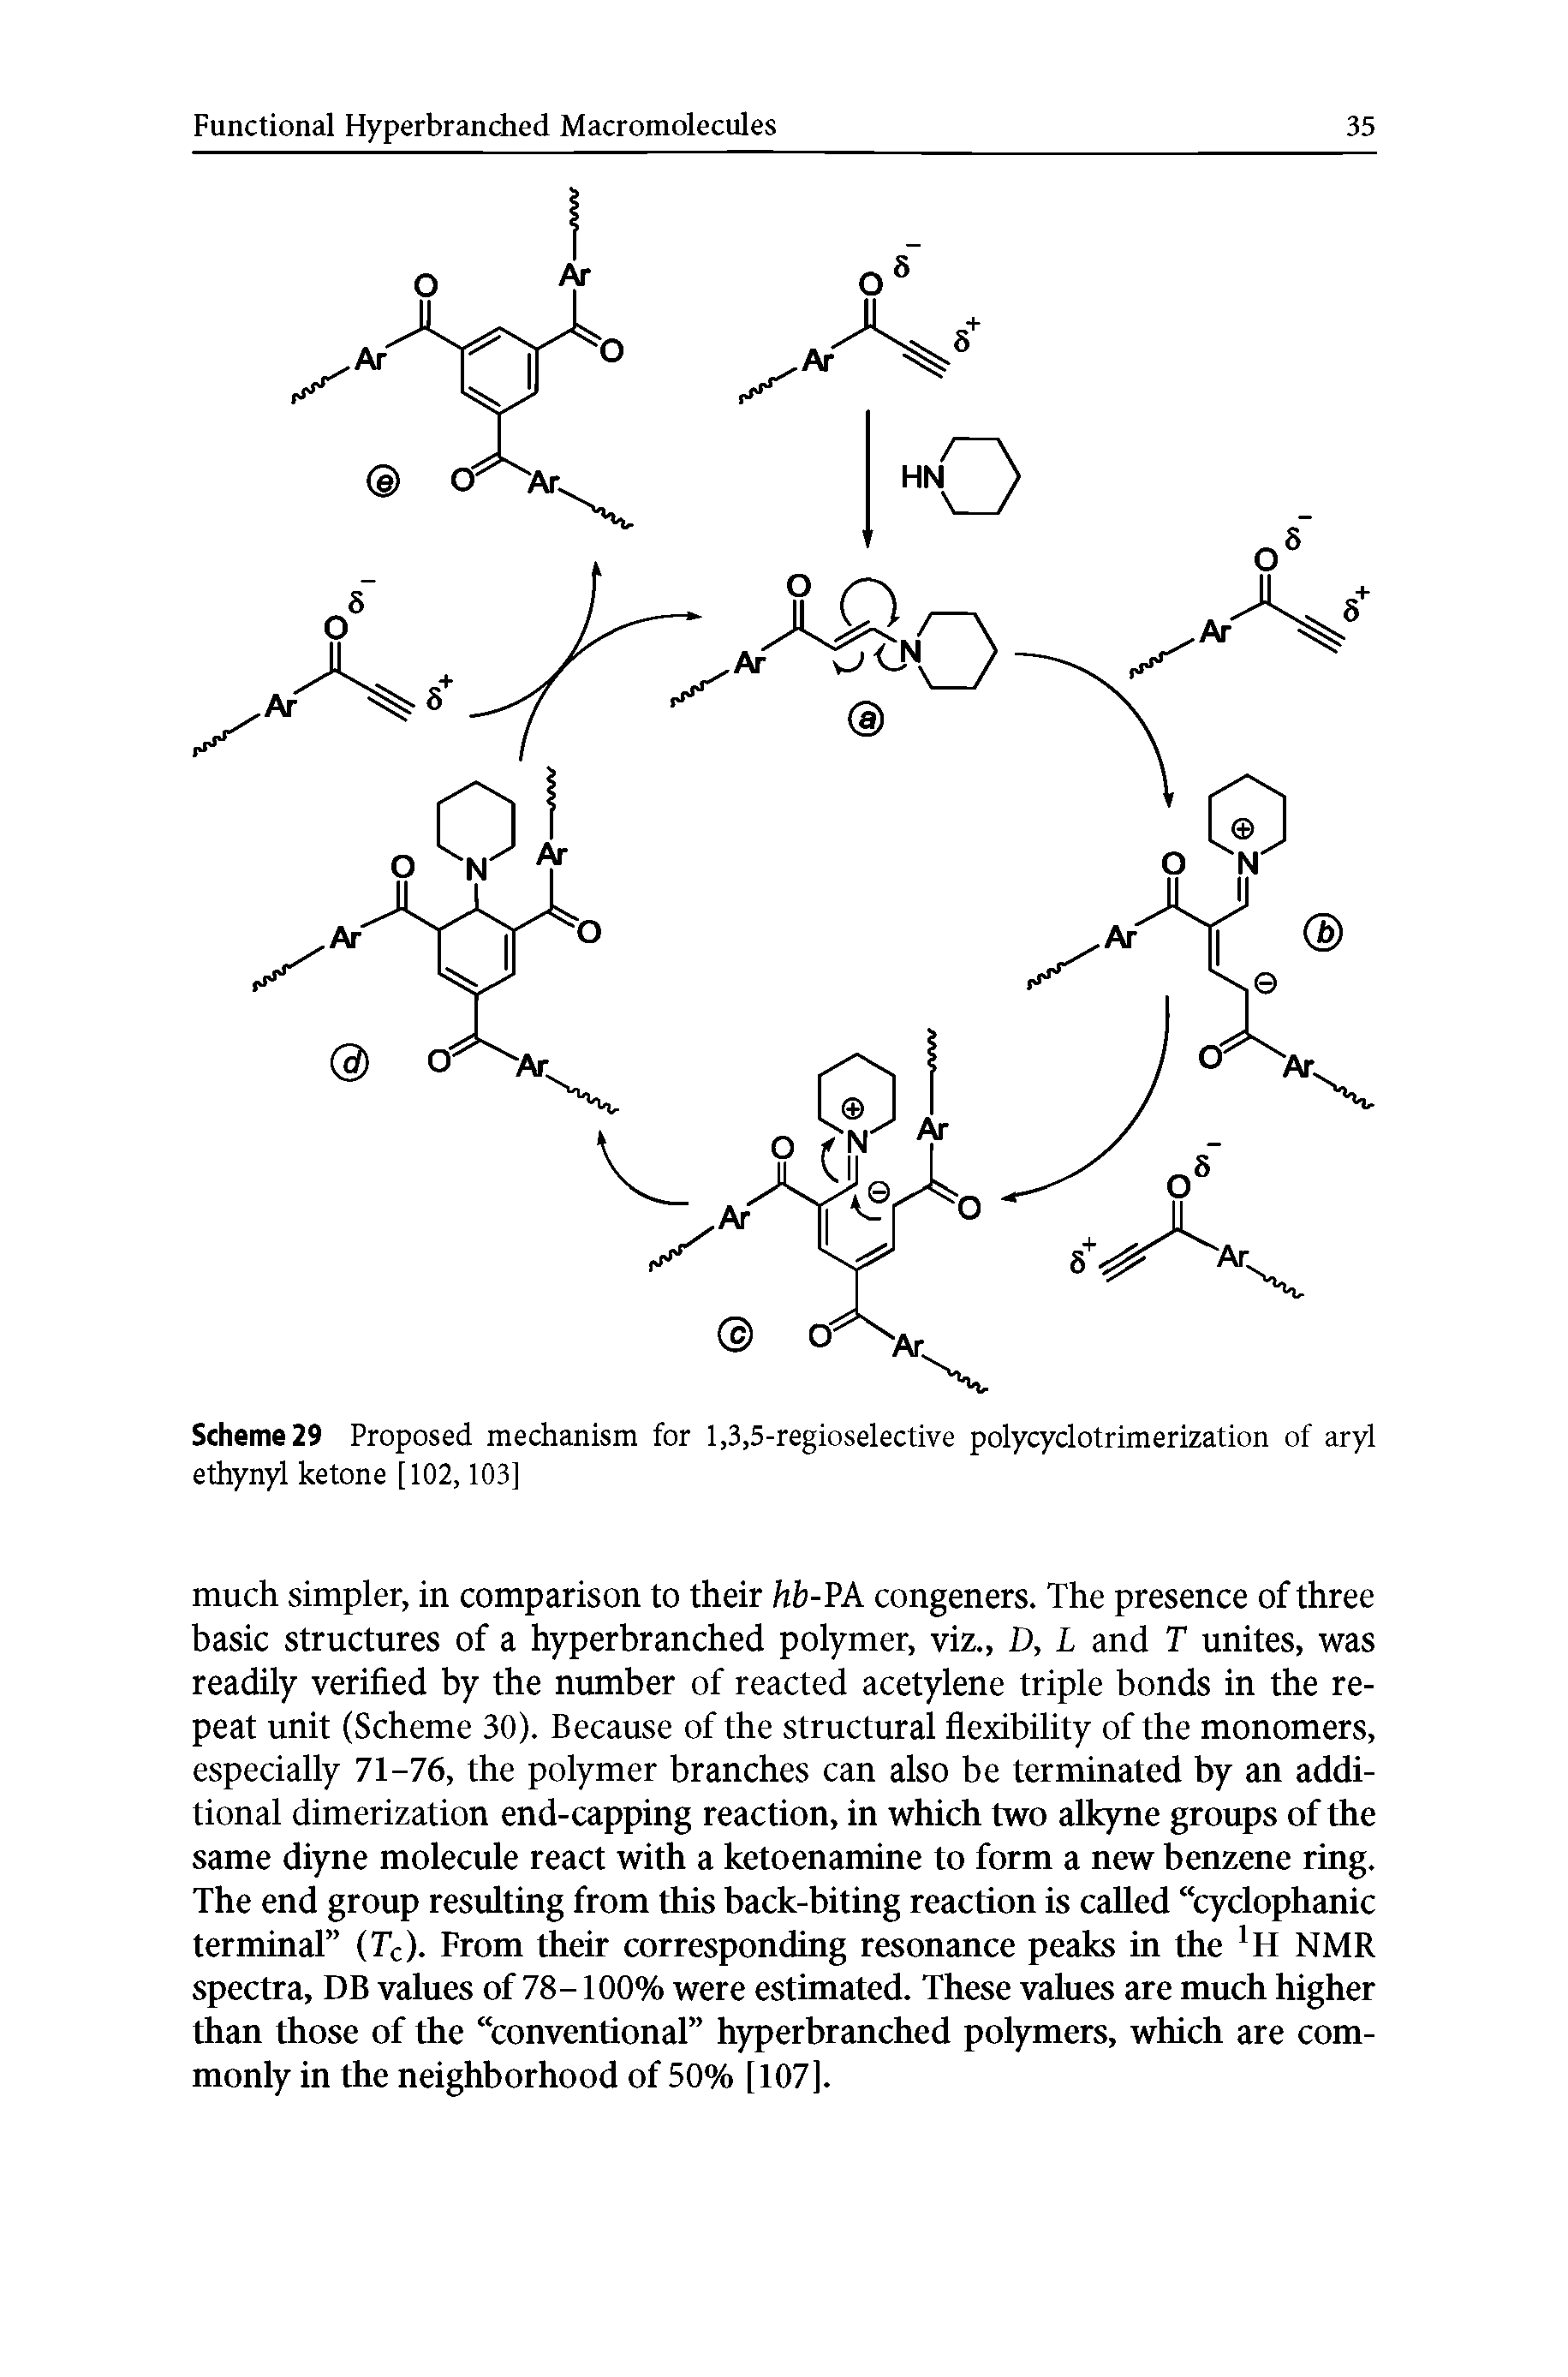 Scheme 29 Proposed mechanism for 1,3,5-regioselective polycydotrimerization of aryl ethynyl ketone [102,103]...